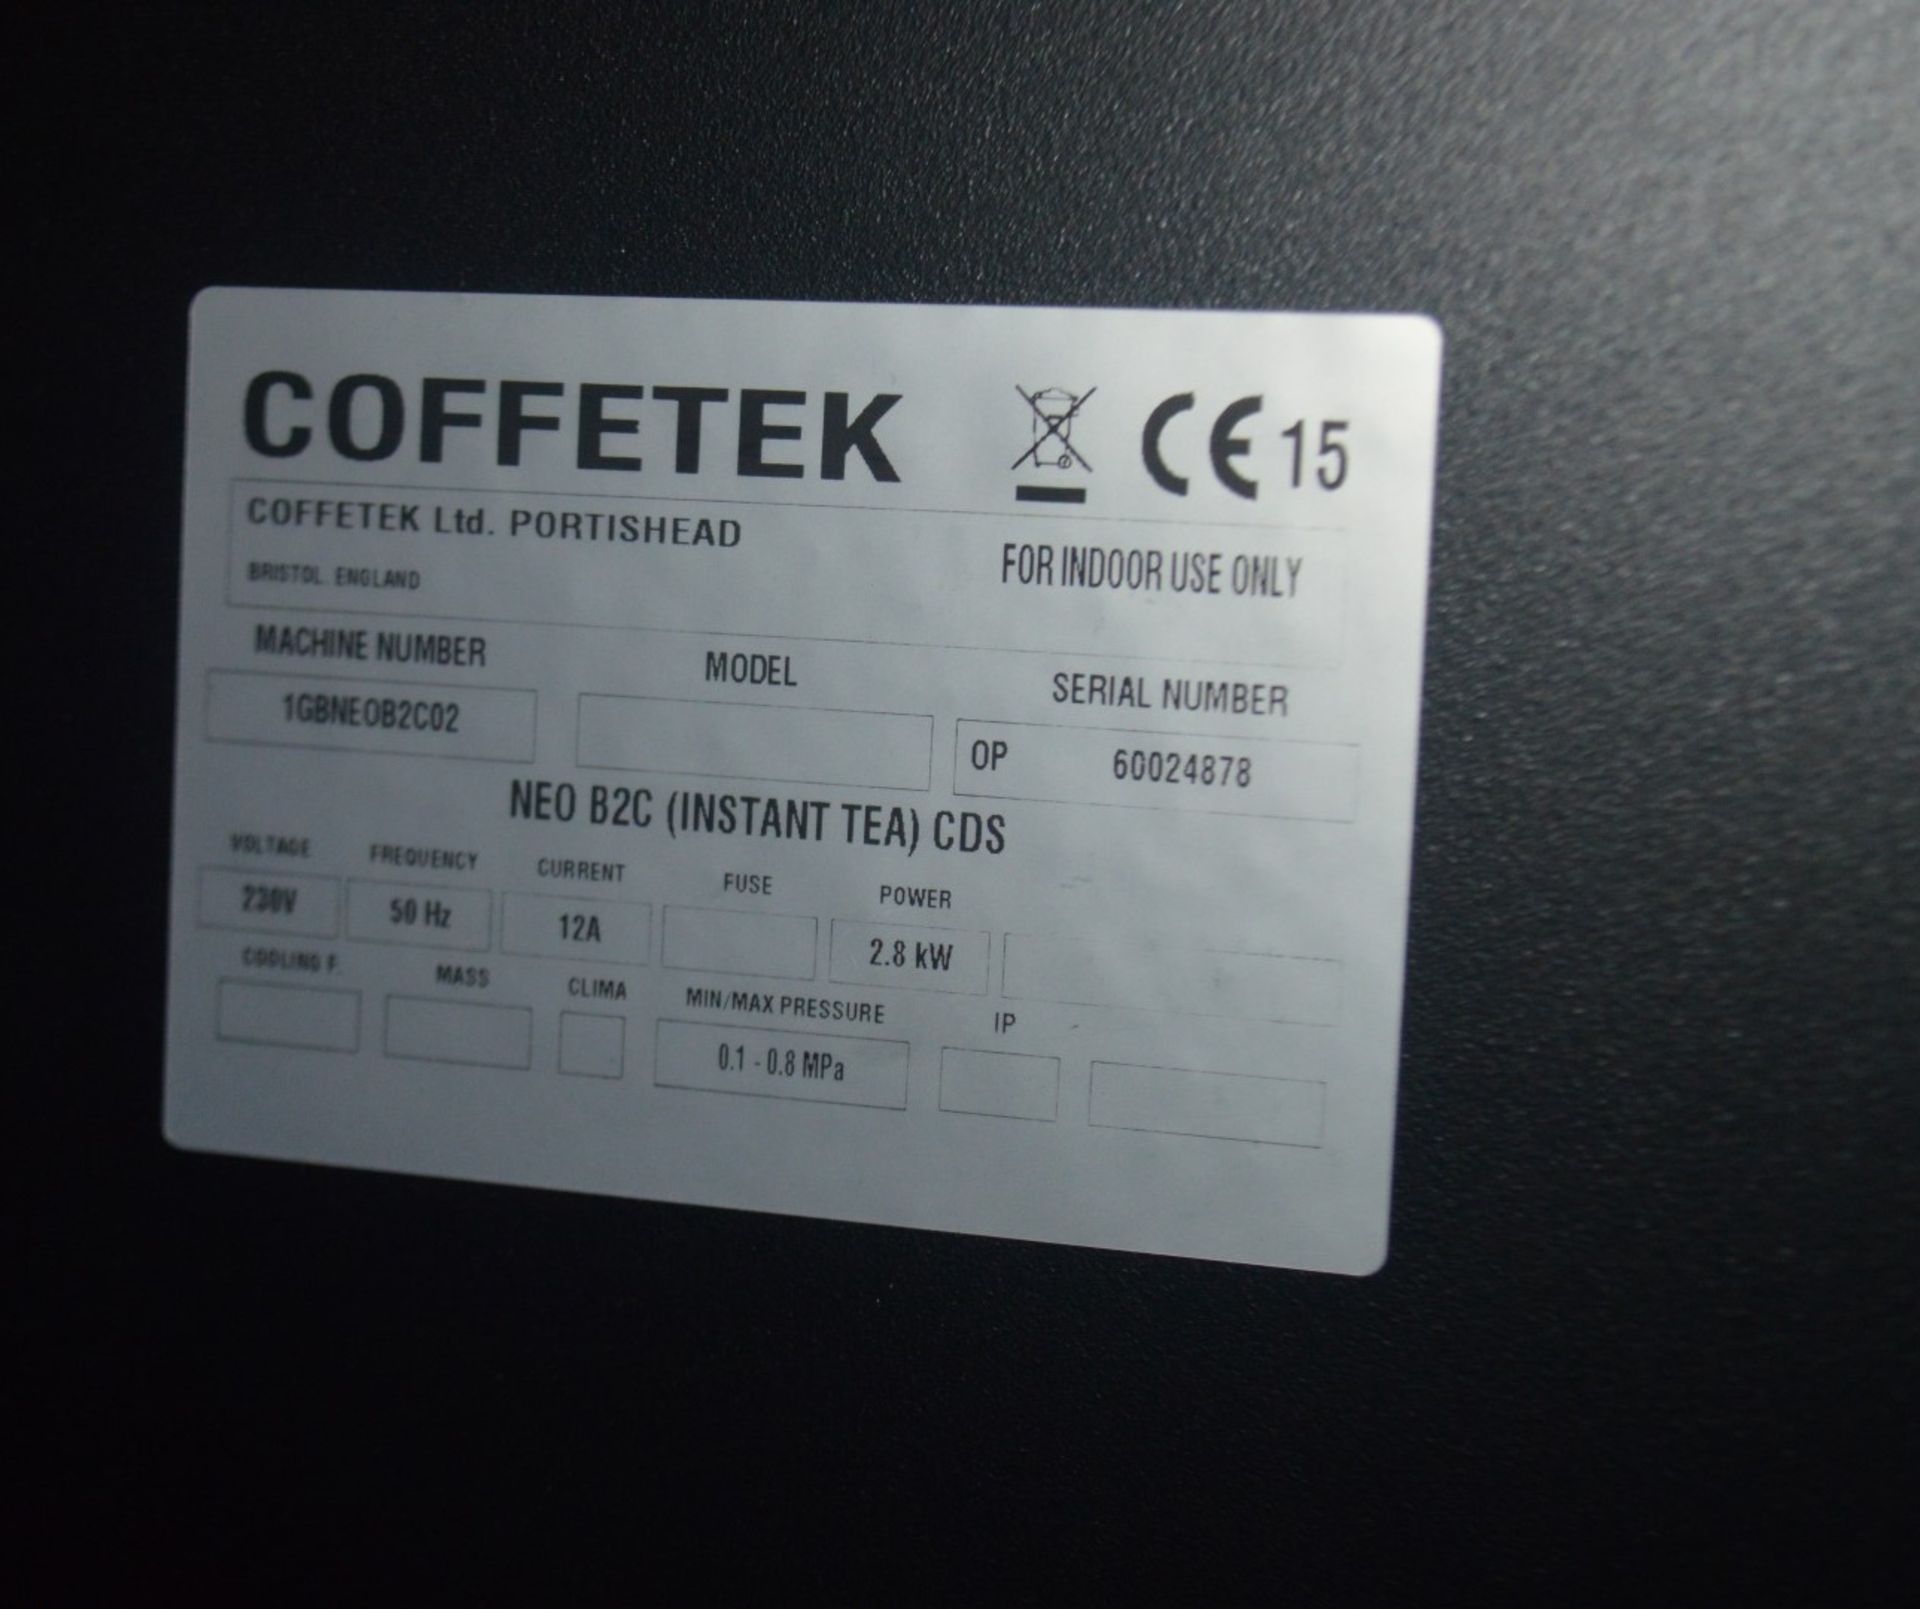 1 x COFFEETEK Touch Screen Instant Hot Drink Vending Machine - Model: Neo B2C (INSTANT TEA) CDS - Ve - Image 3 of 9